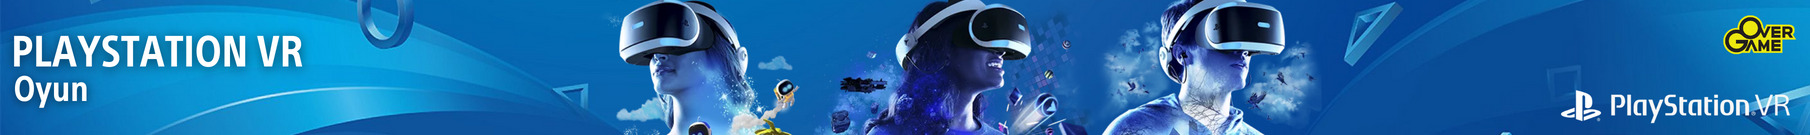 Playstation VR Oyun.jpg (85 KB)